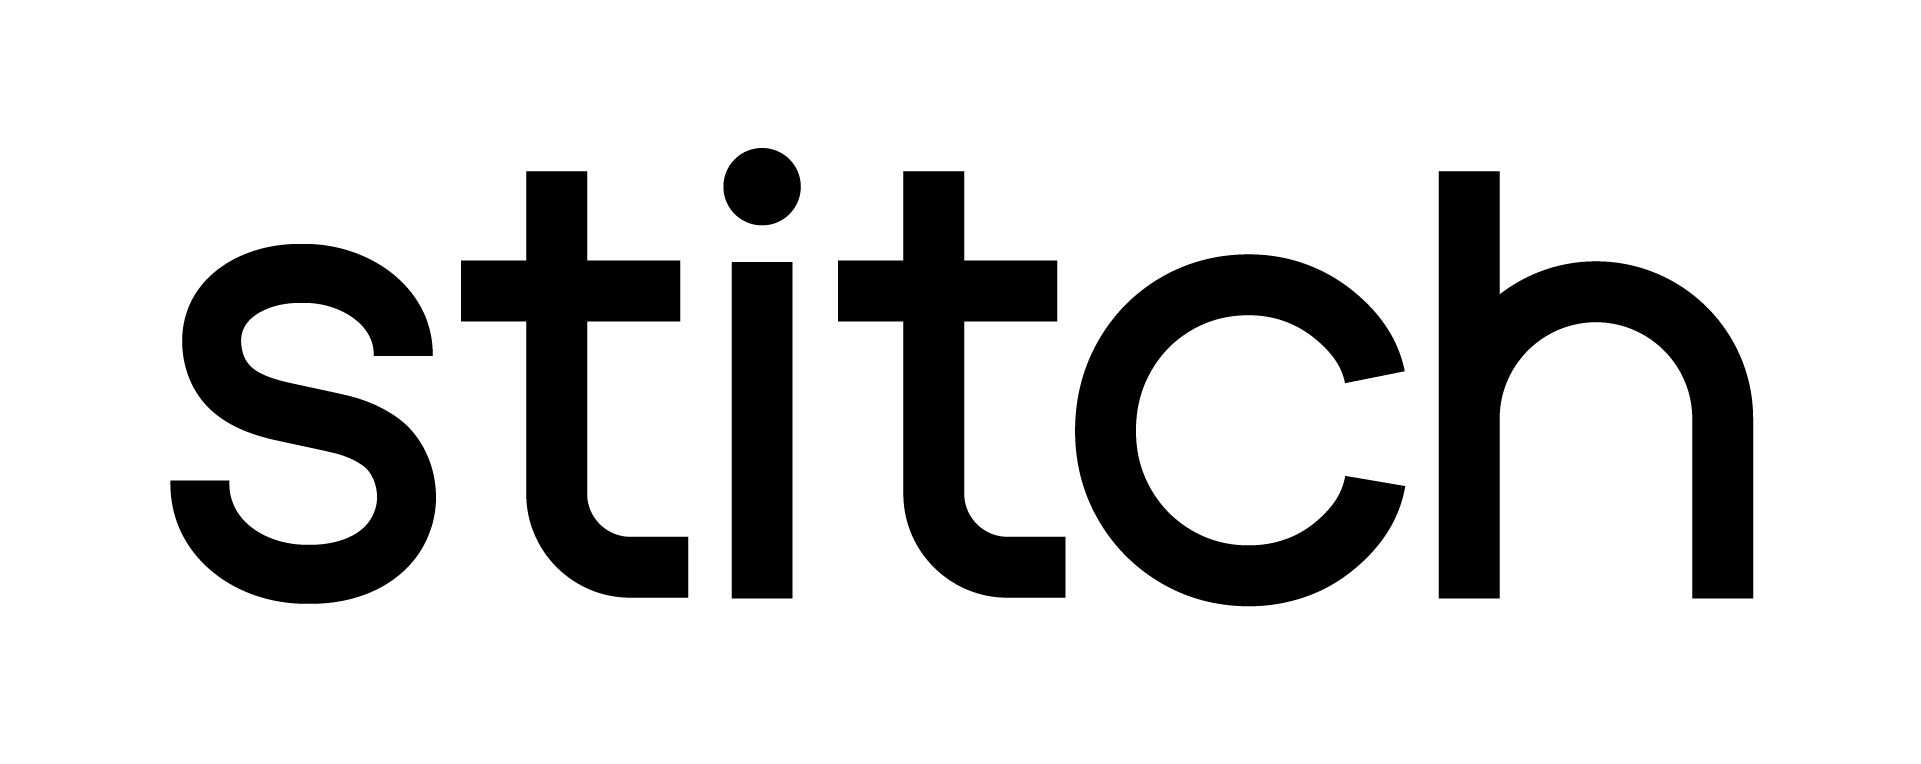 Stitch - Regular black logo